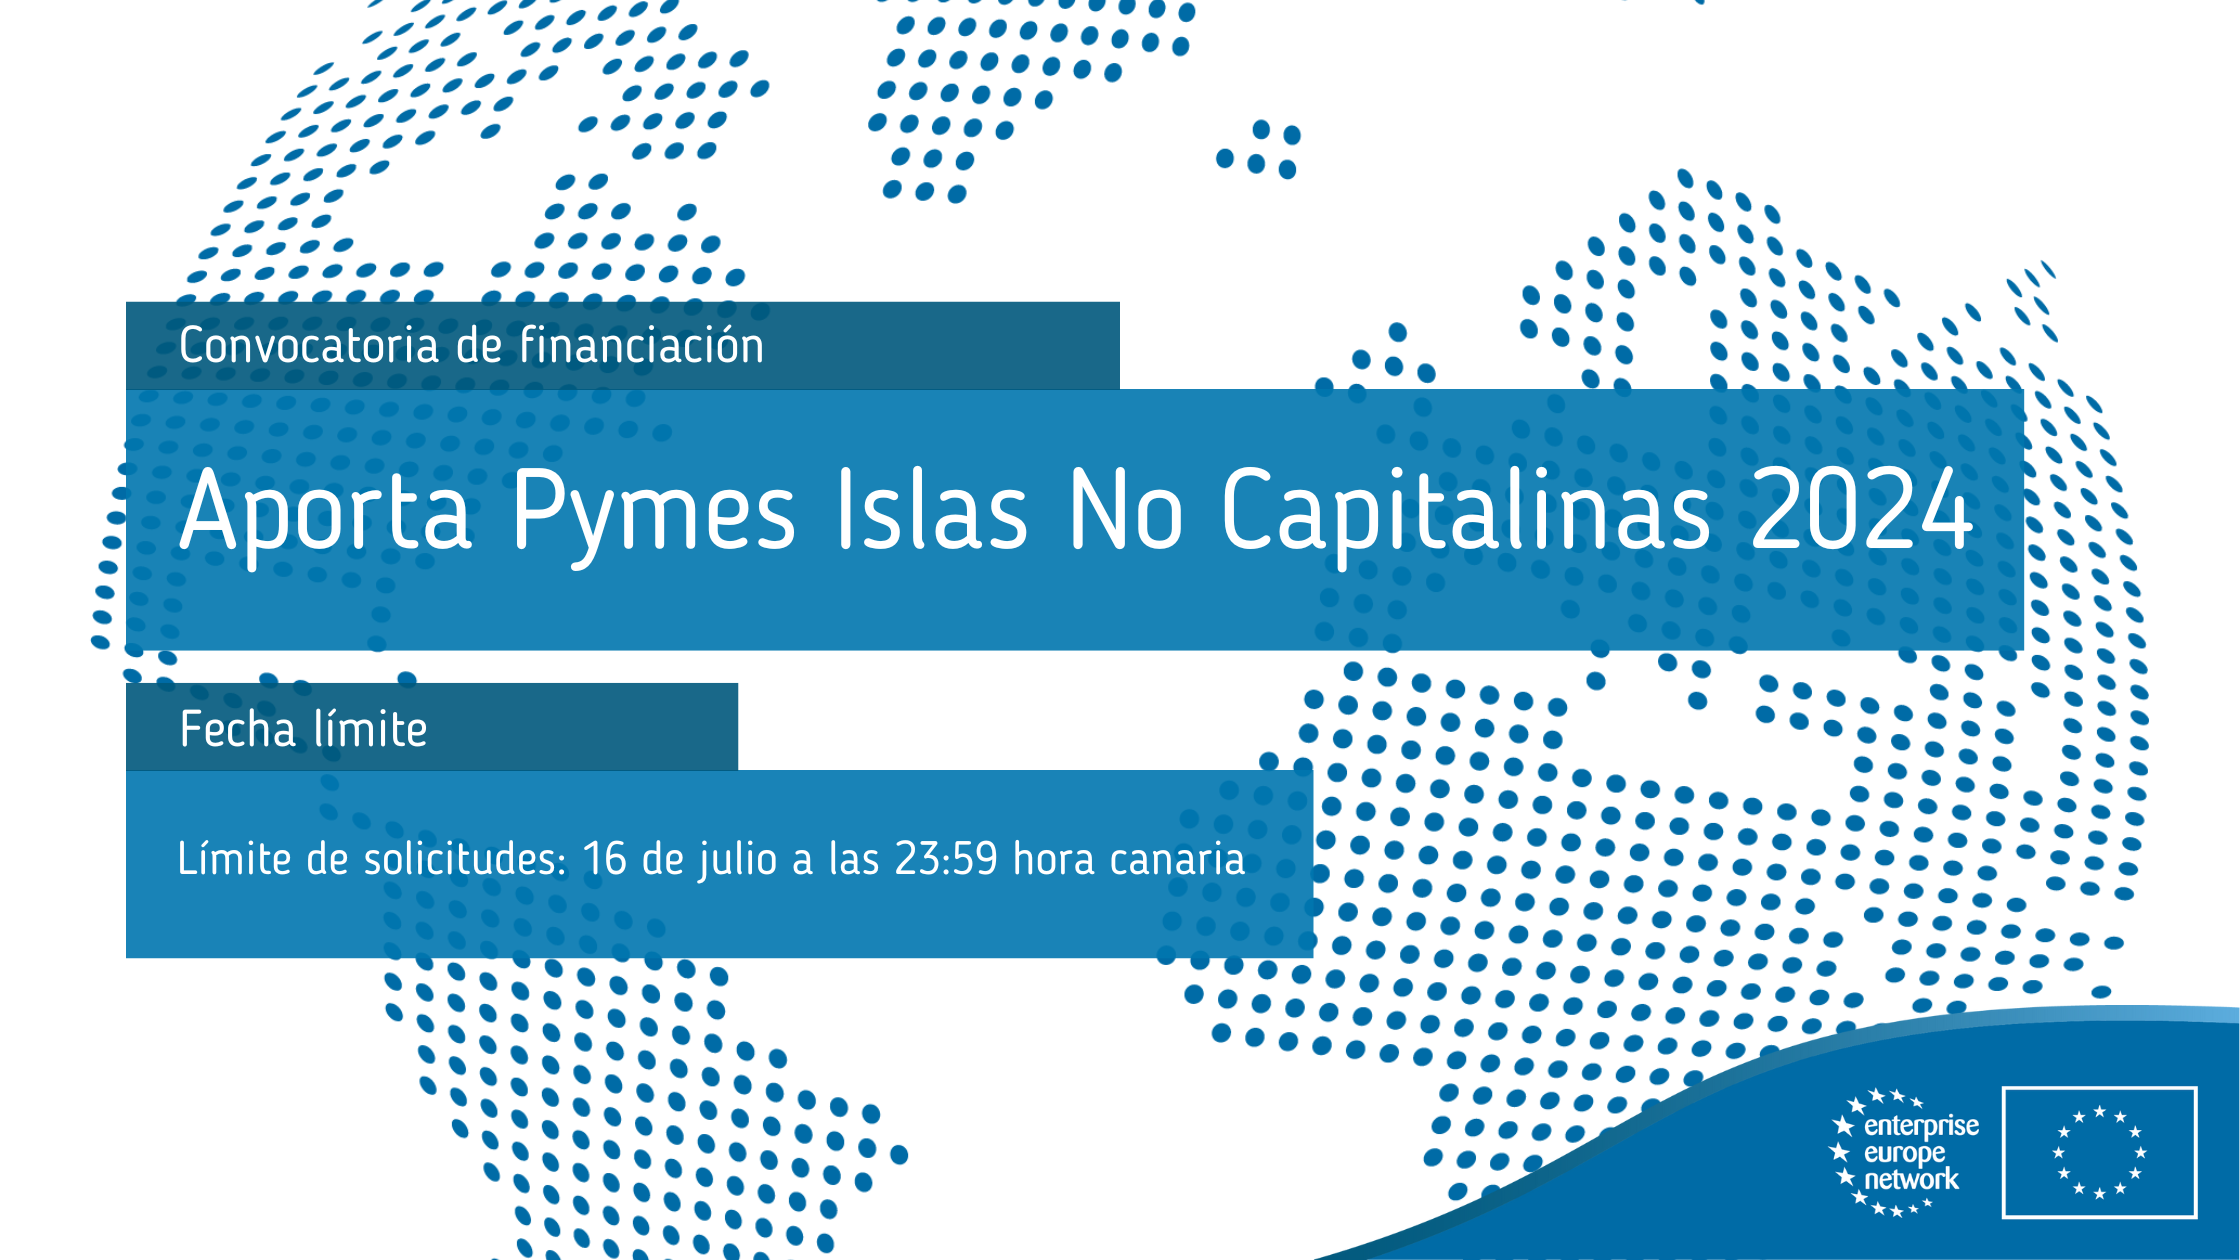 Aporta_Pymes_Islas_No_Capitalinas_2024